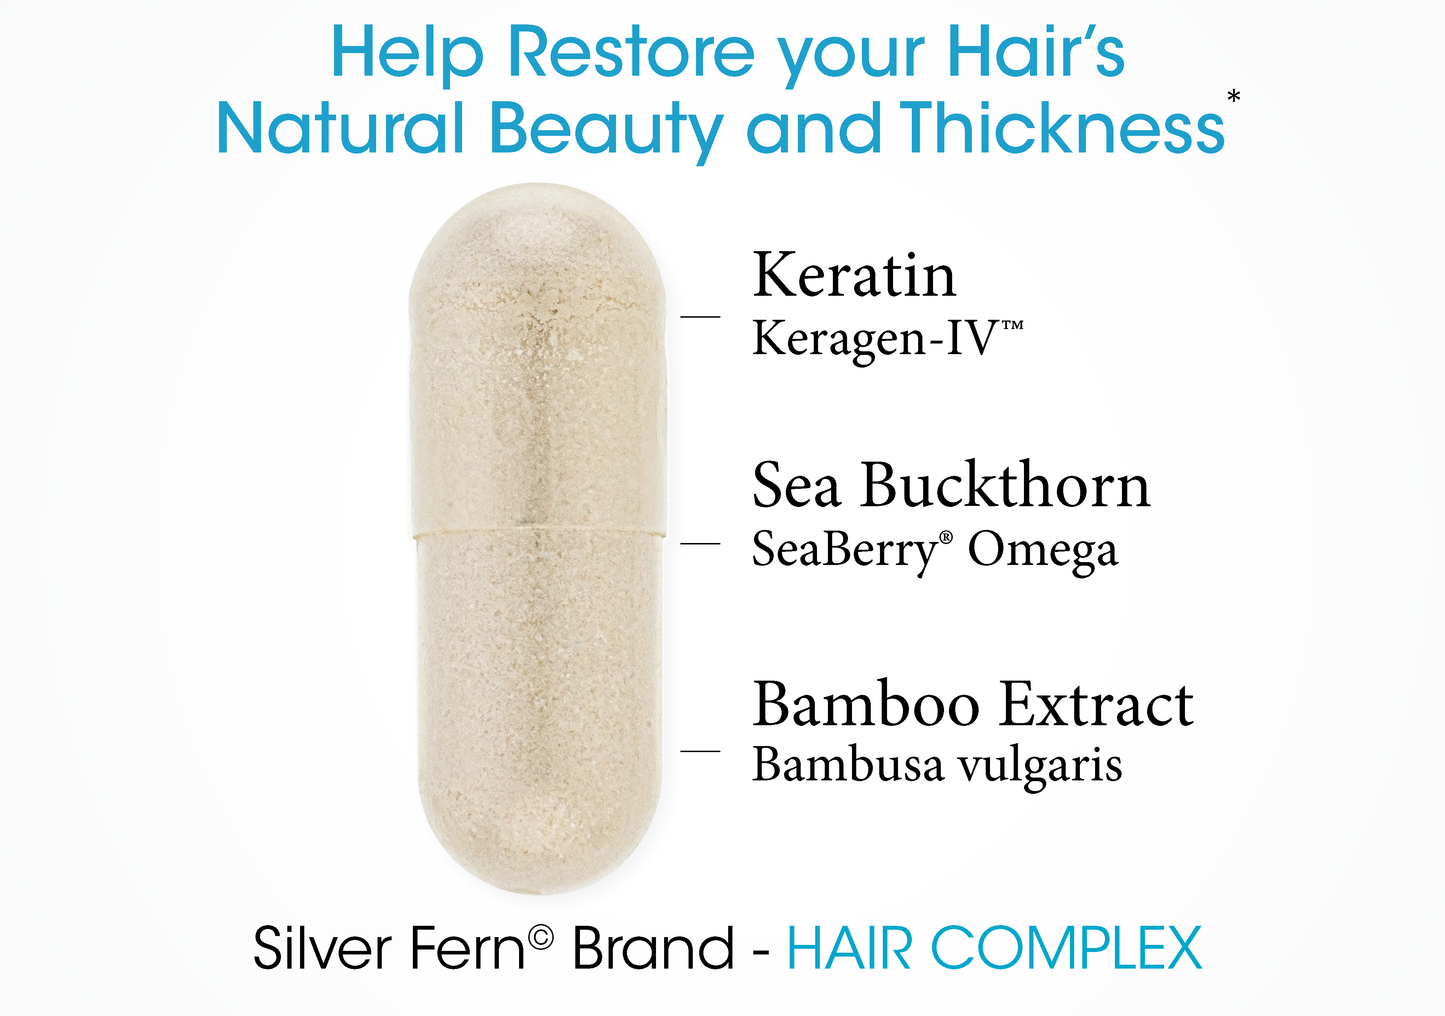 Hair Complex - Keratin, Sea Buckthorn, and Silica